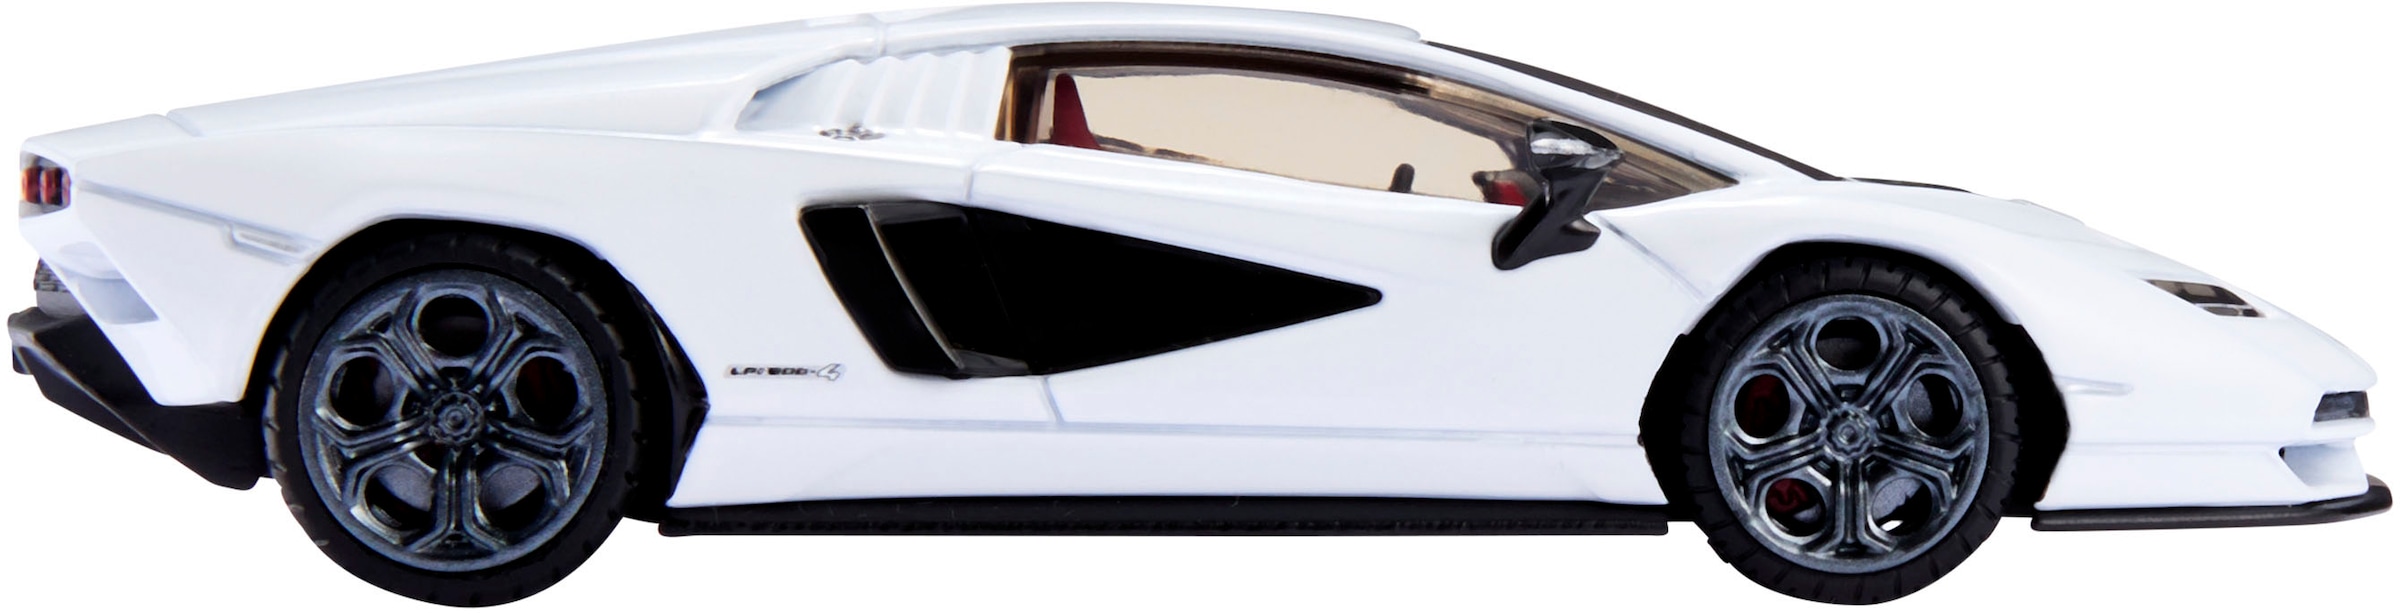 1:43« Spielzeug-Auto Wheels »Premium bei Lamborghini Hot